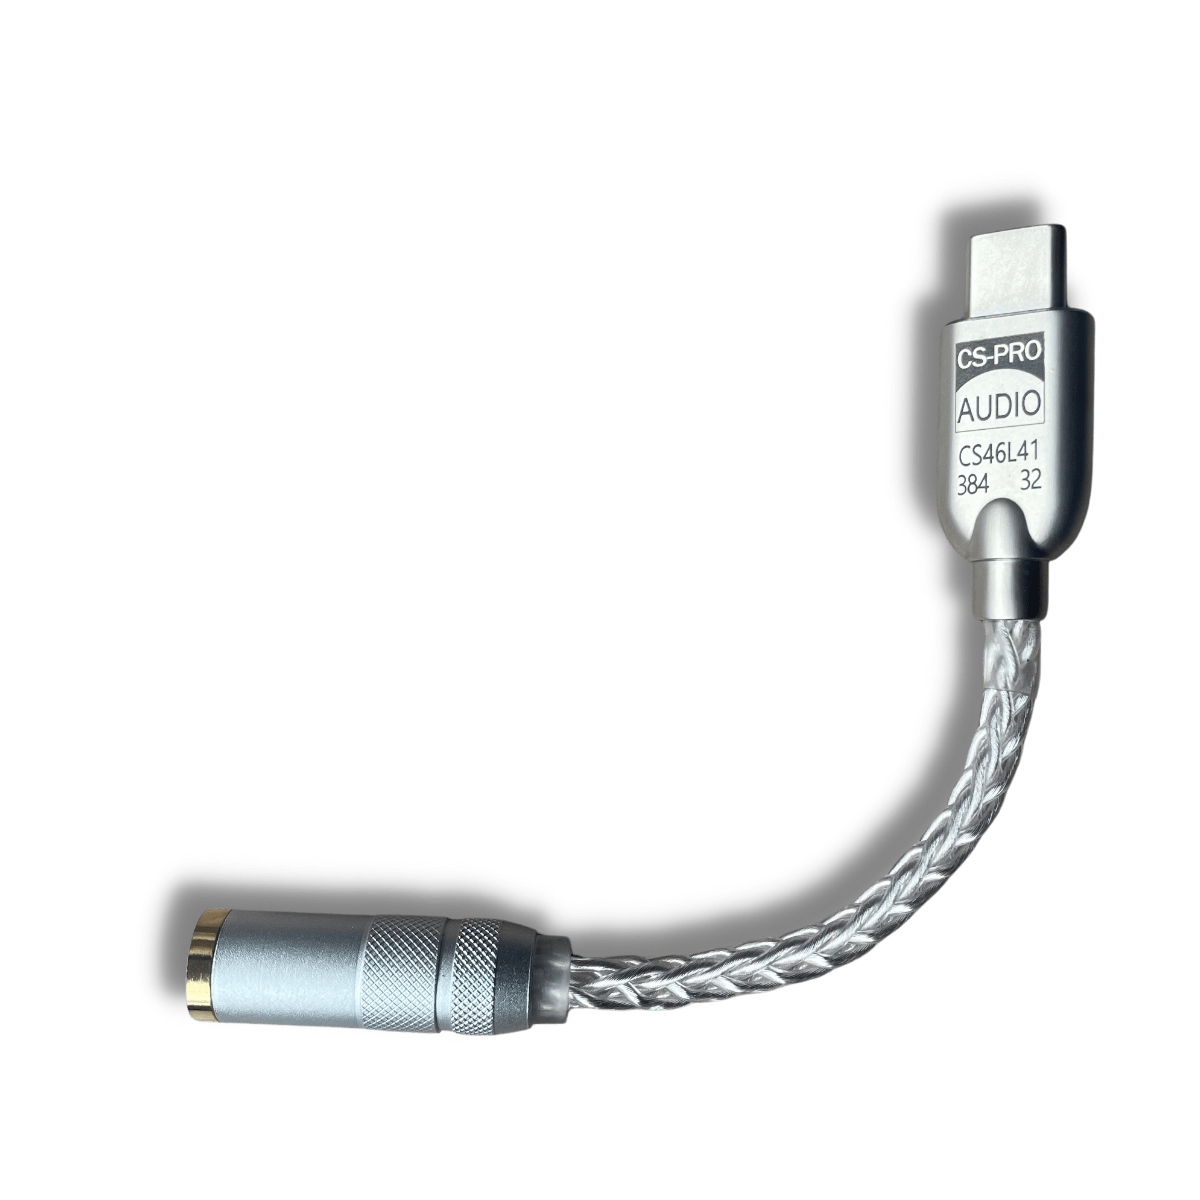 Tiandirenhe CS-PRO Audio CS46L41 Type-C to 3.5mm DAC dongle